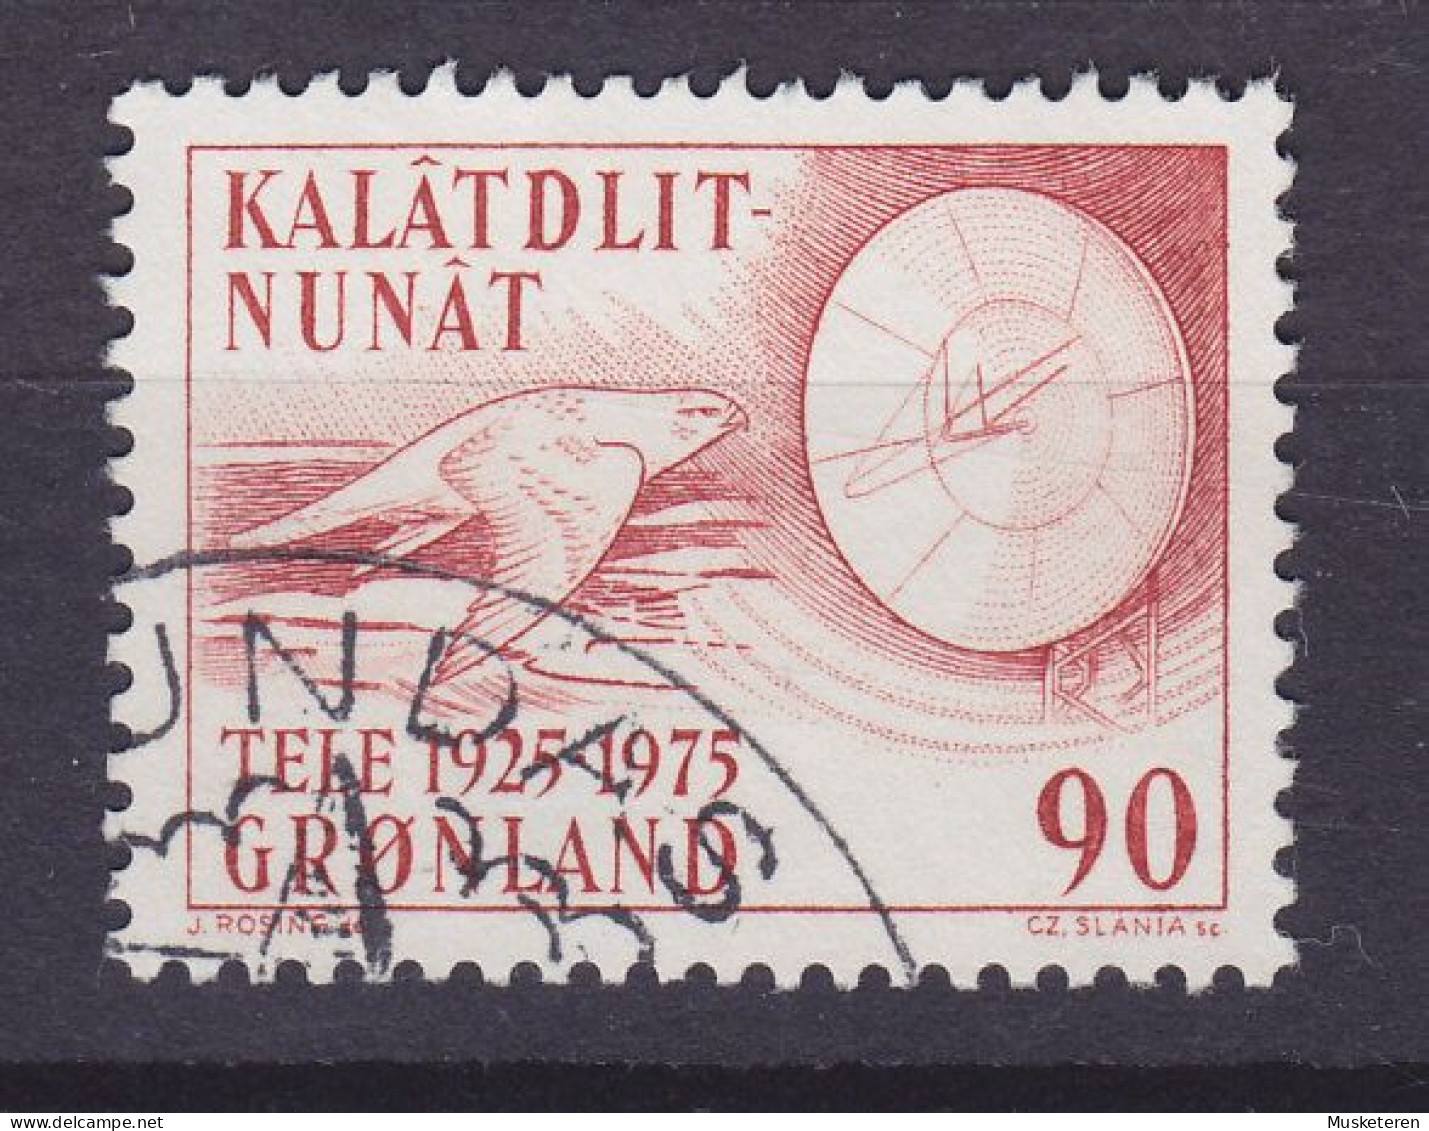 Greenland 1975 Mi. 94, 90 (Ø) Telekommunikation Bird Vogel Oiseau Gerfalke Parabolantenne (Cz. Slania) - Gebruikt